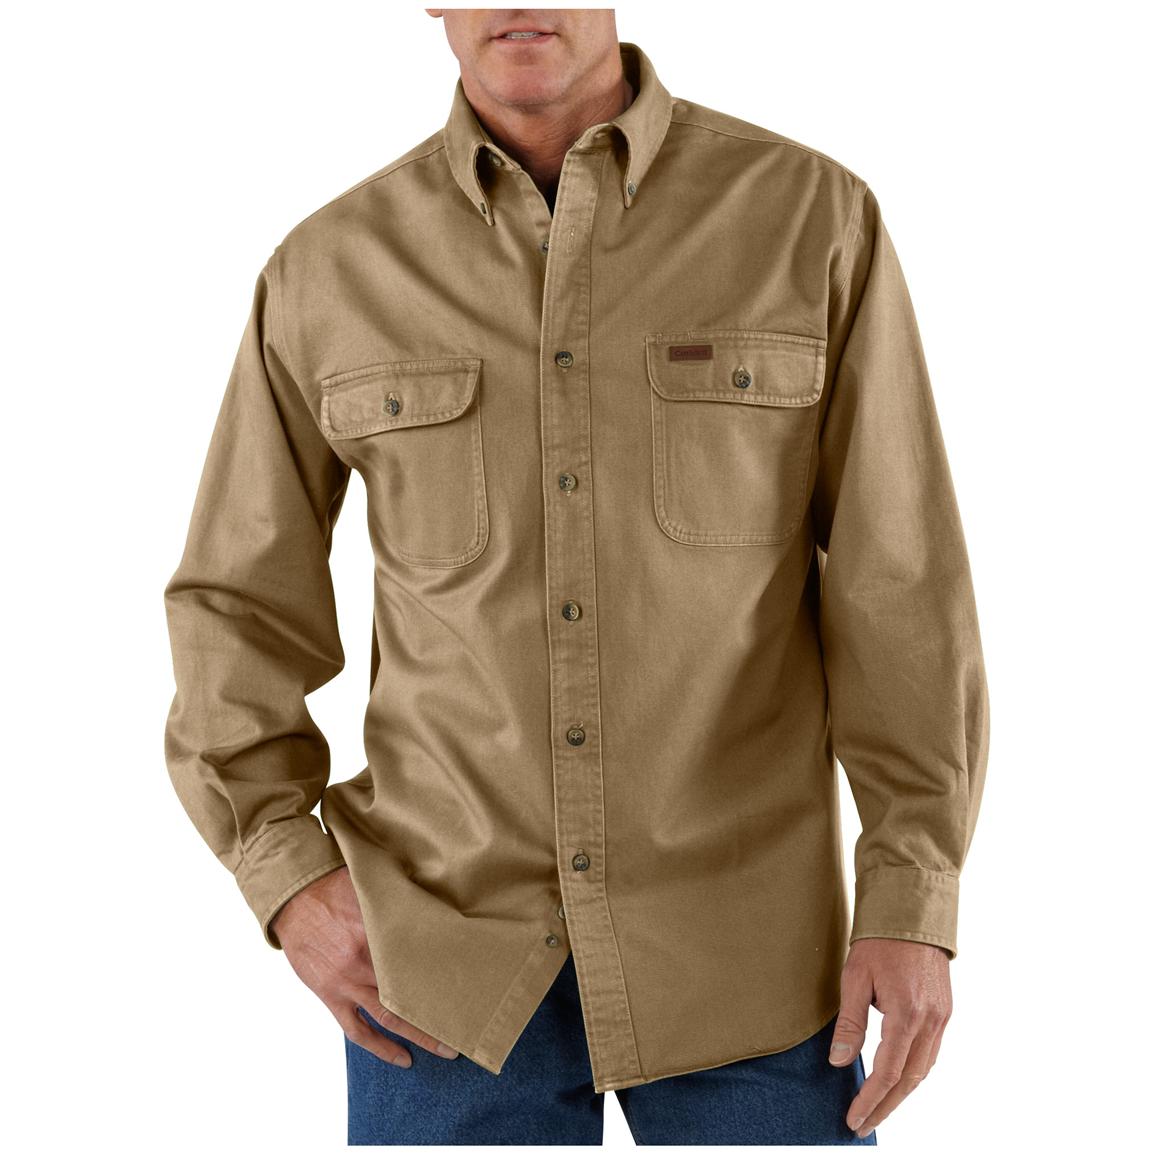 Men's Carhartt® Sandstone Twill Shirt - 184155, Shirts at Sportsman's Guide